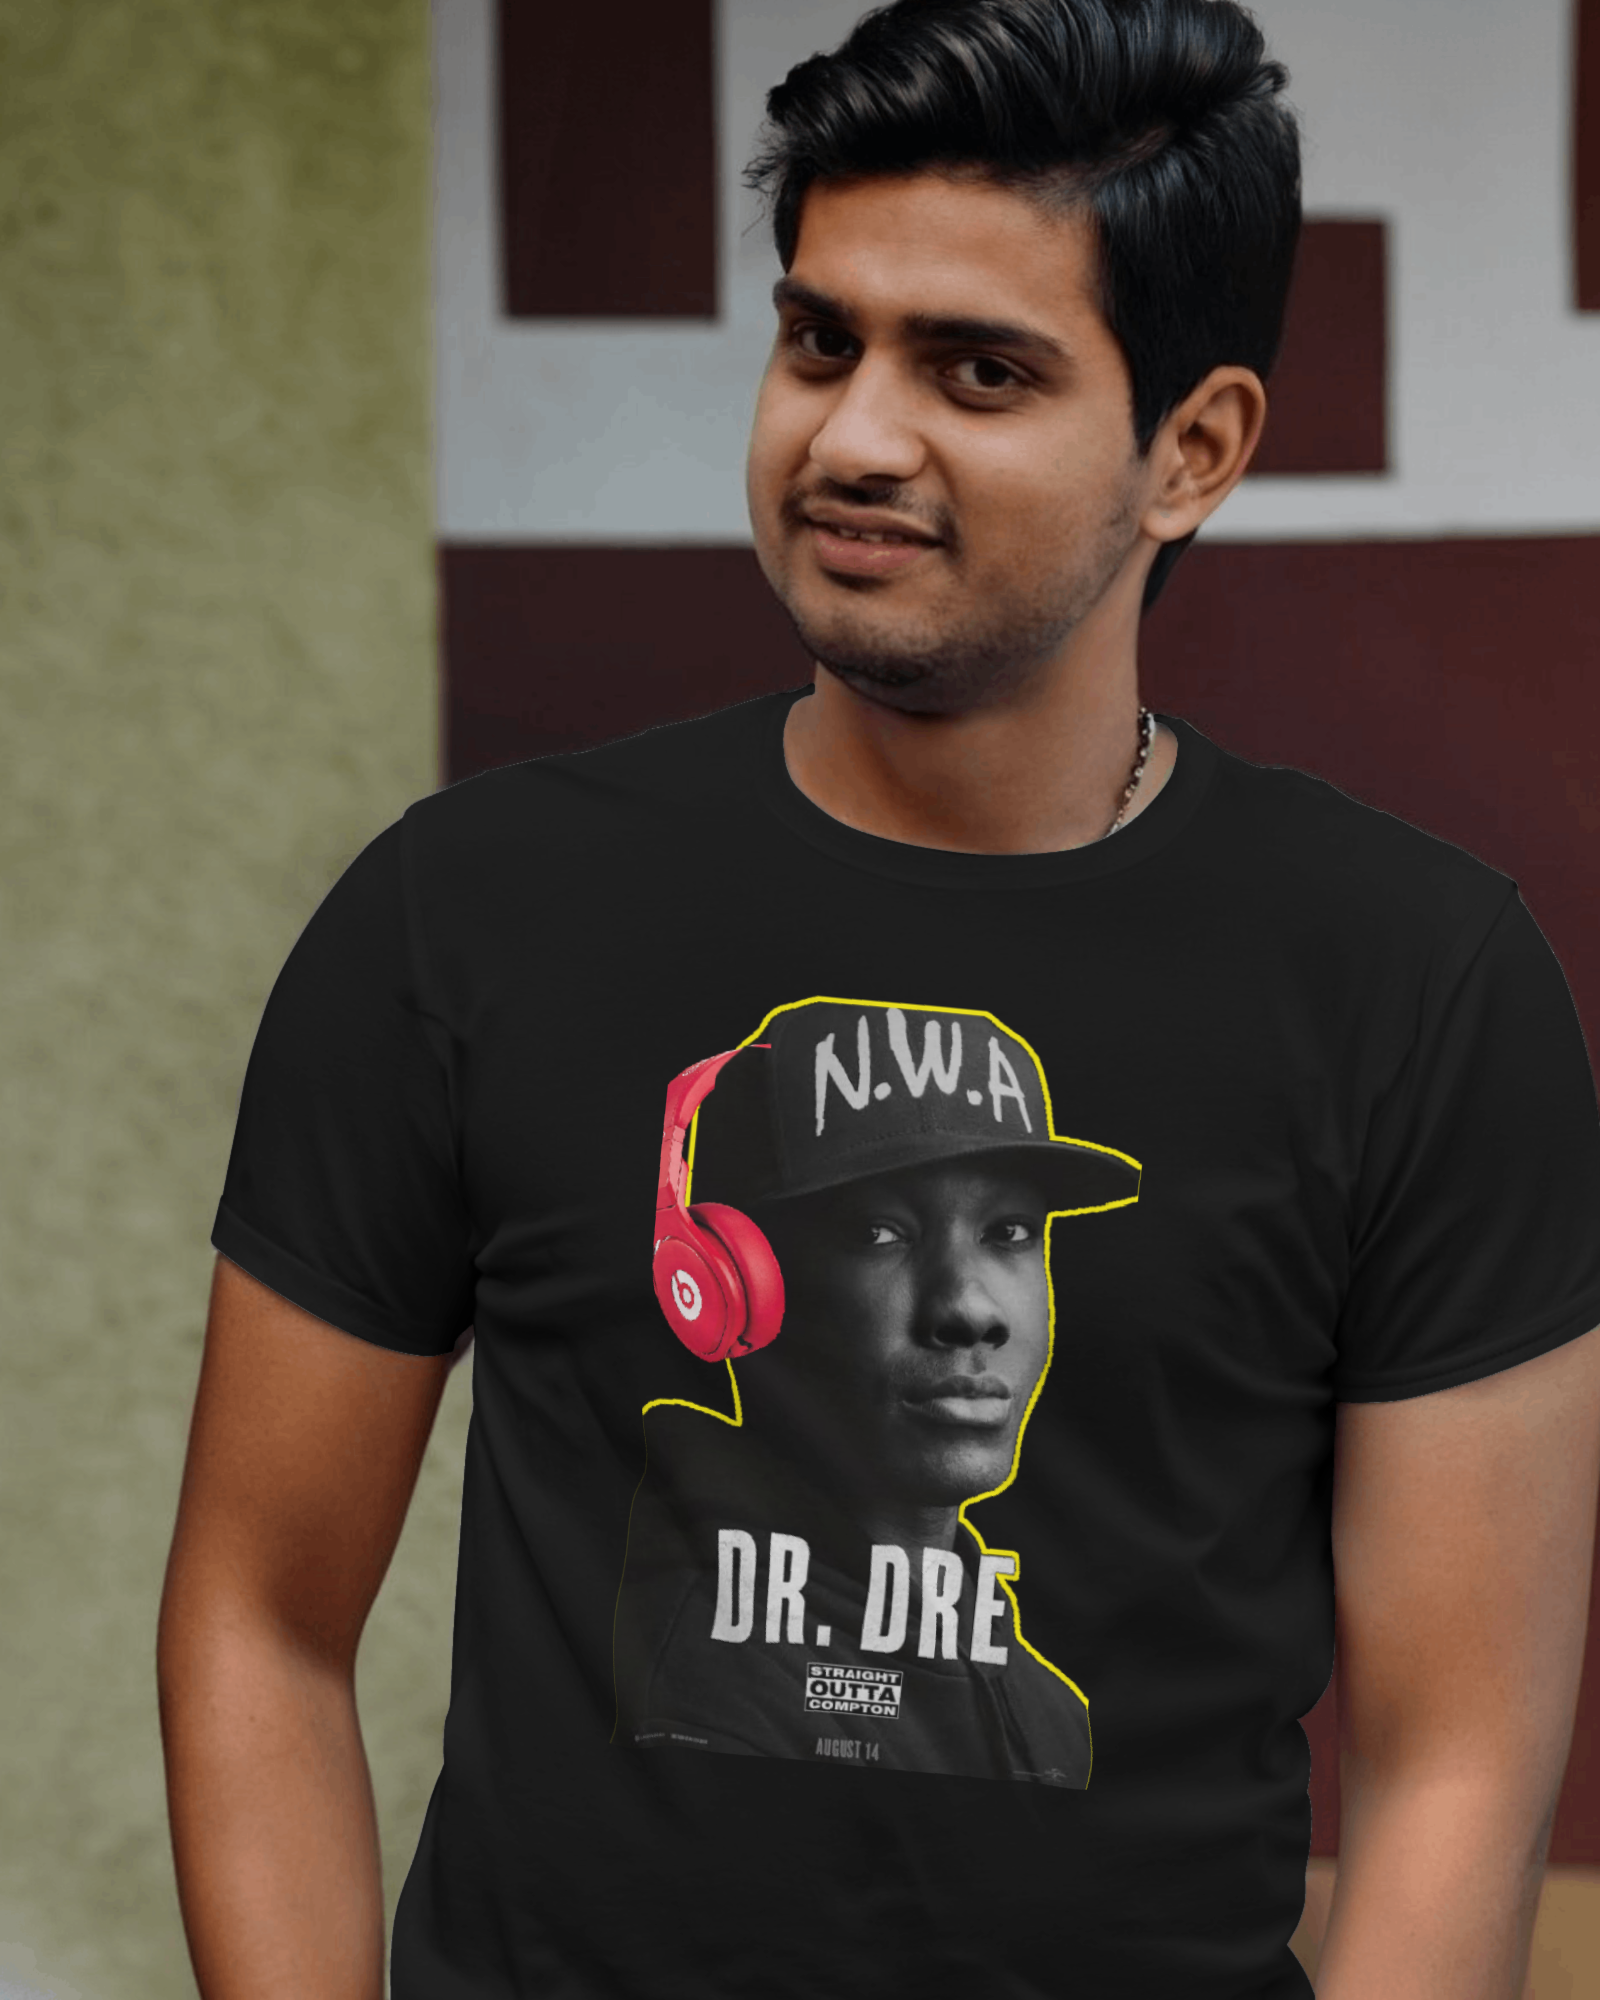 DR. DRE Printed Tshirt for Man - Women | Do Bronx Fan | Vintage Style